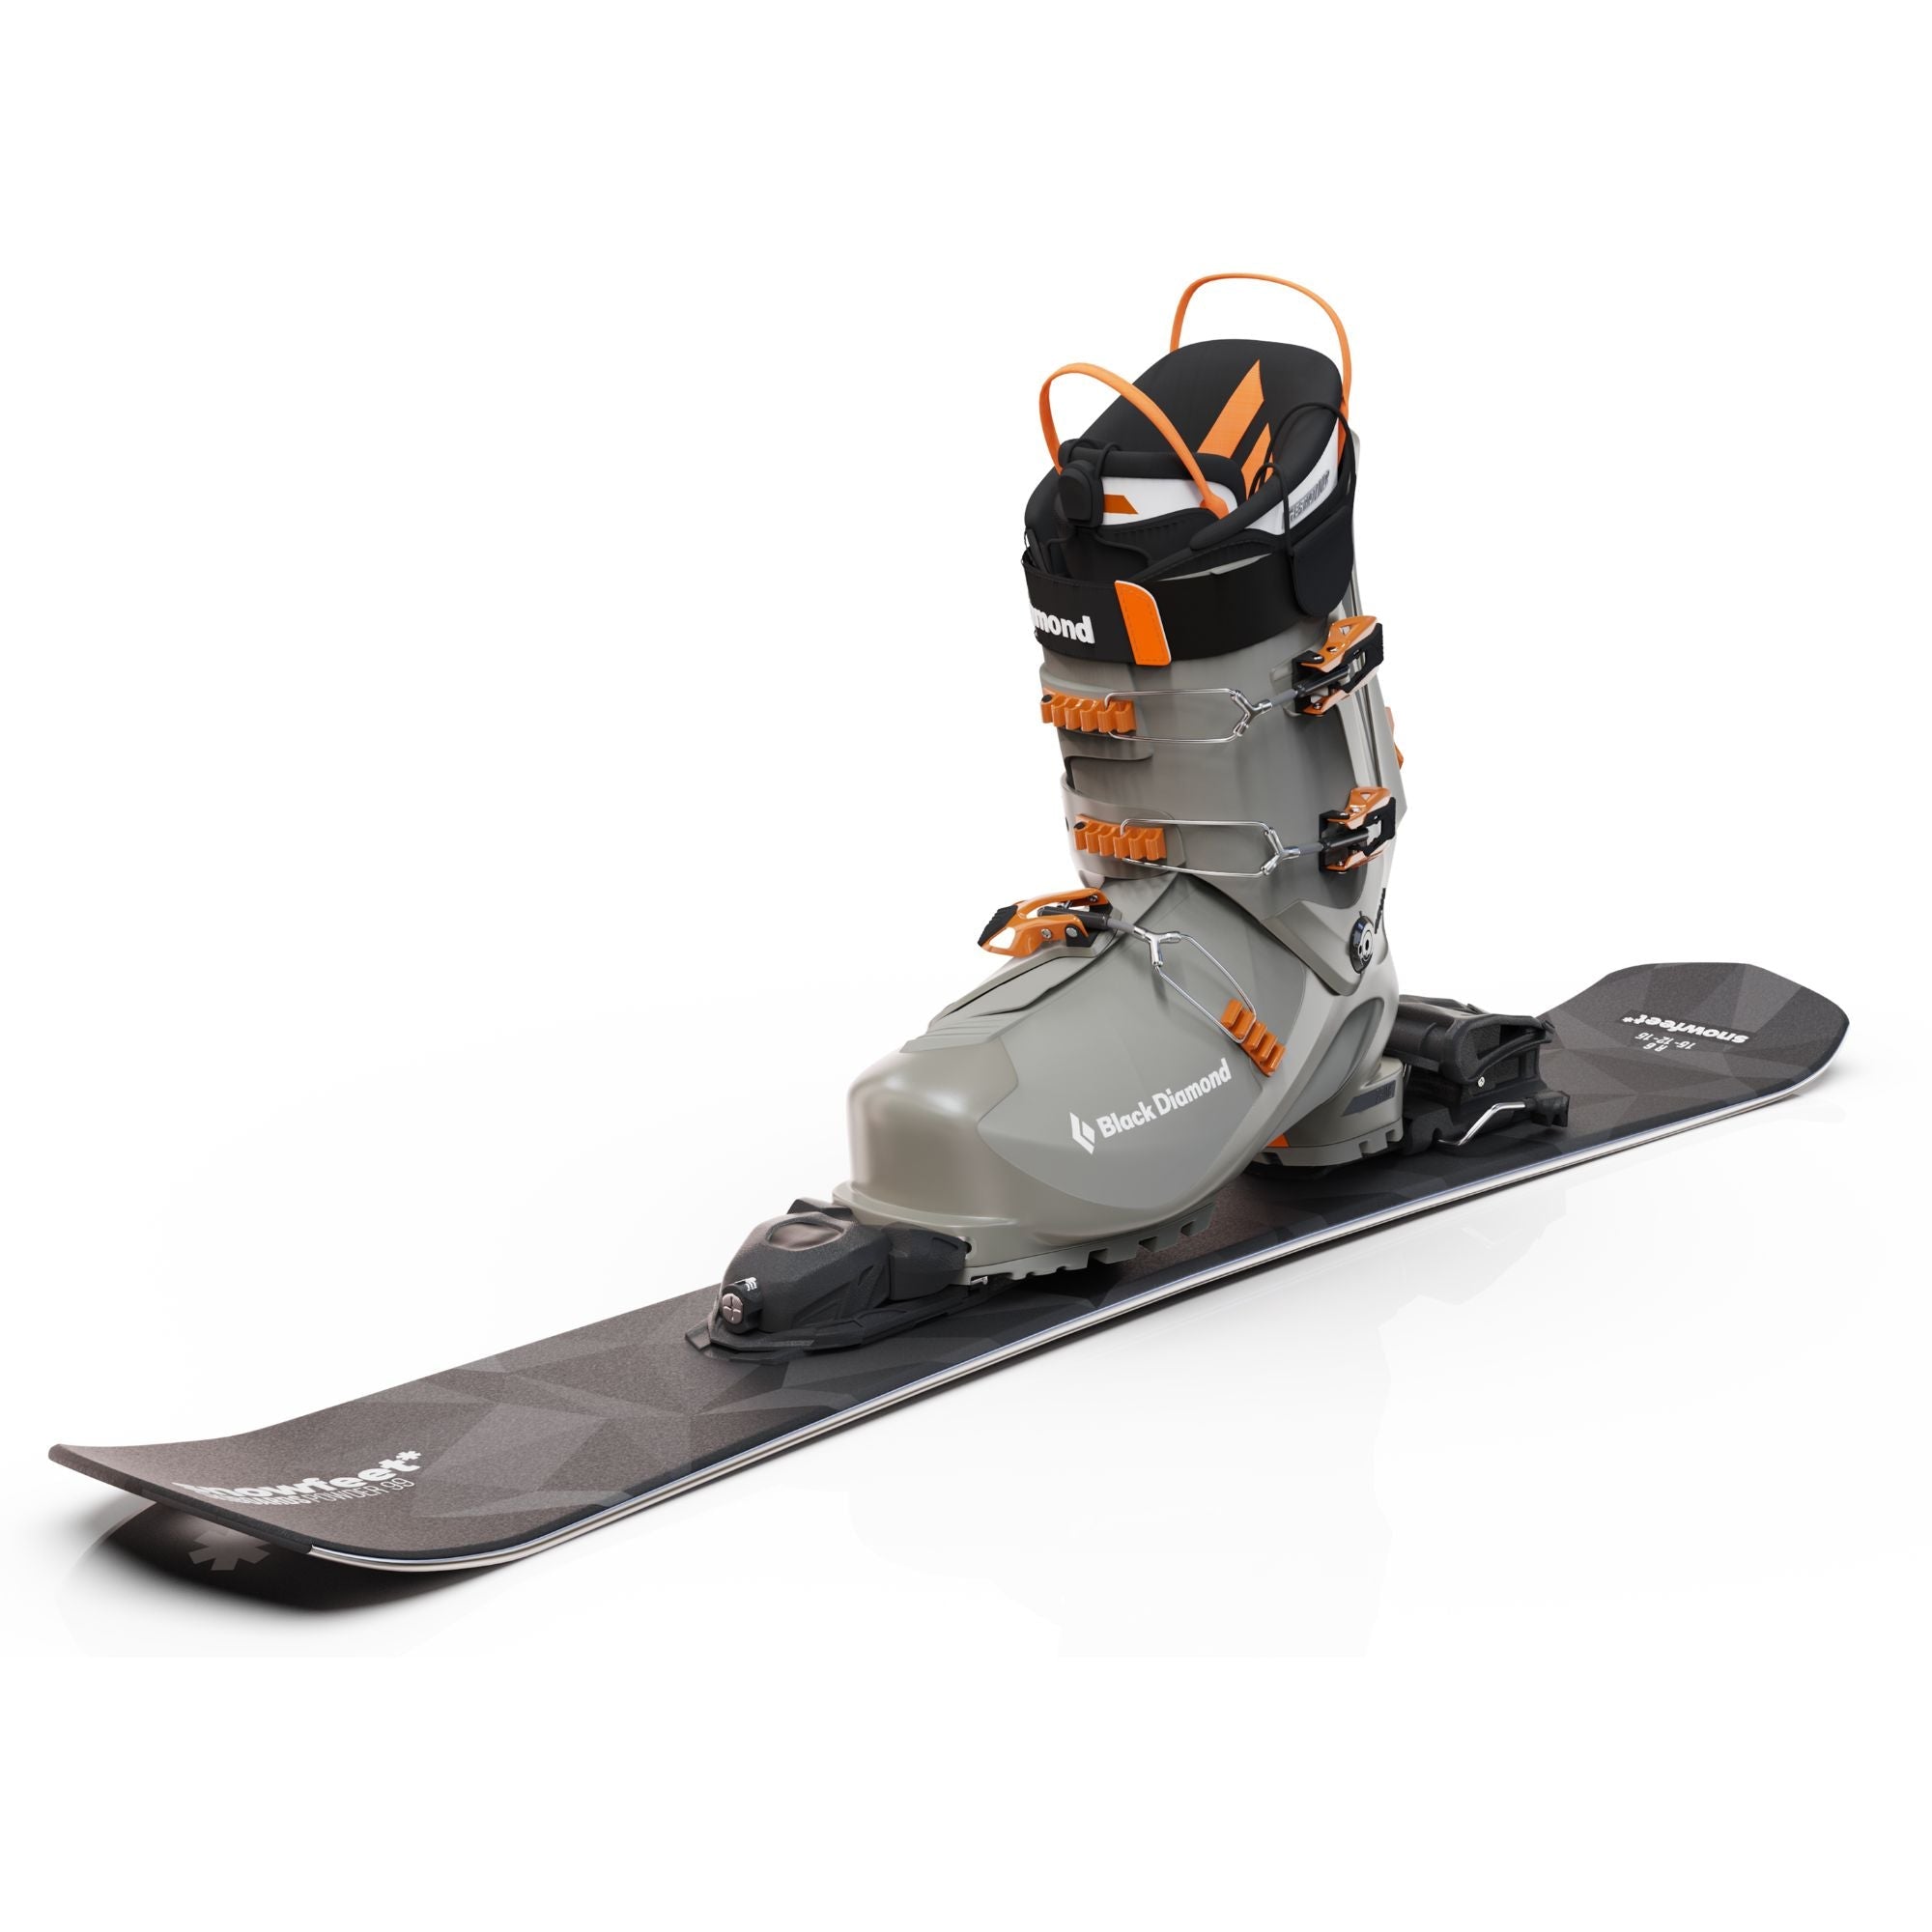 Snowfeet* POWDER Skiblades | 99 CM | Skiboards Snowblades Short Skis